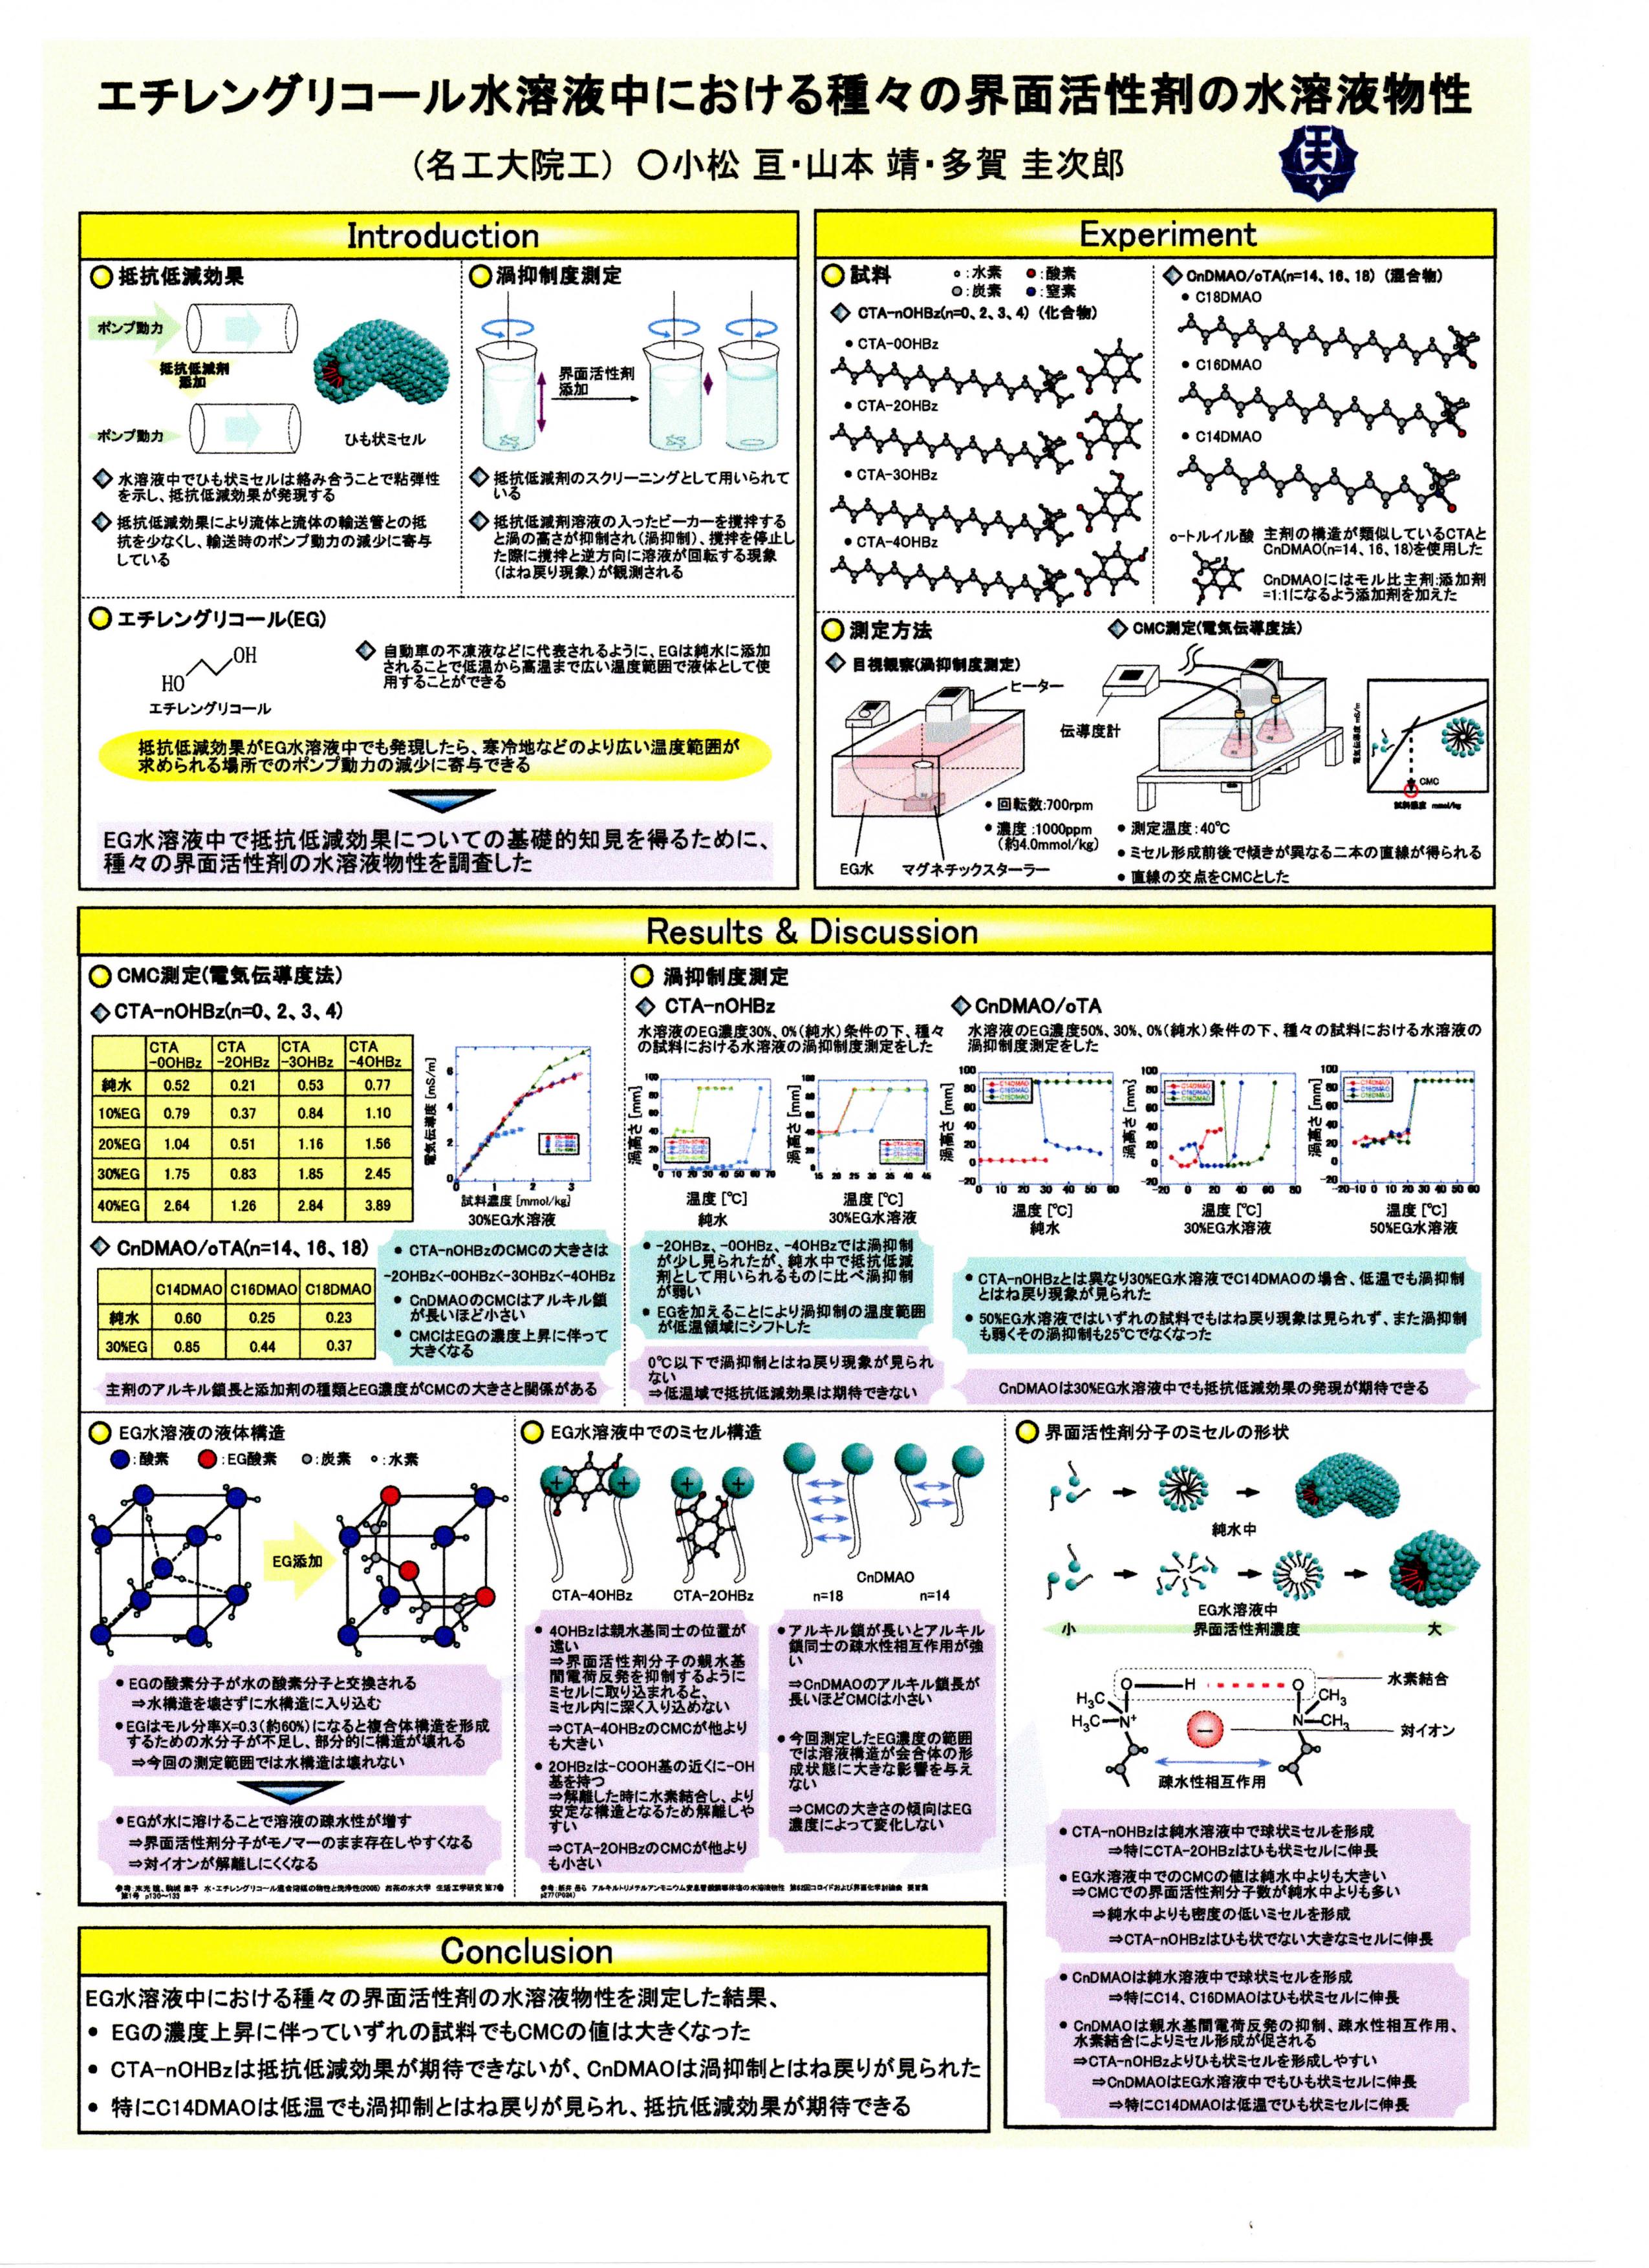 https://www.nitech.ac.jp/mt_imgs/komatsu_poster.jpg